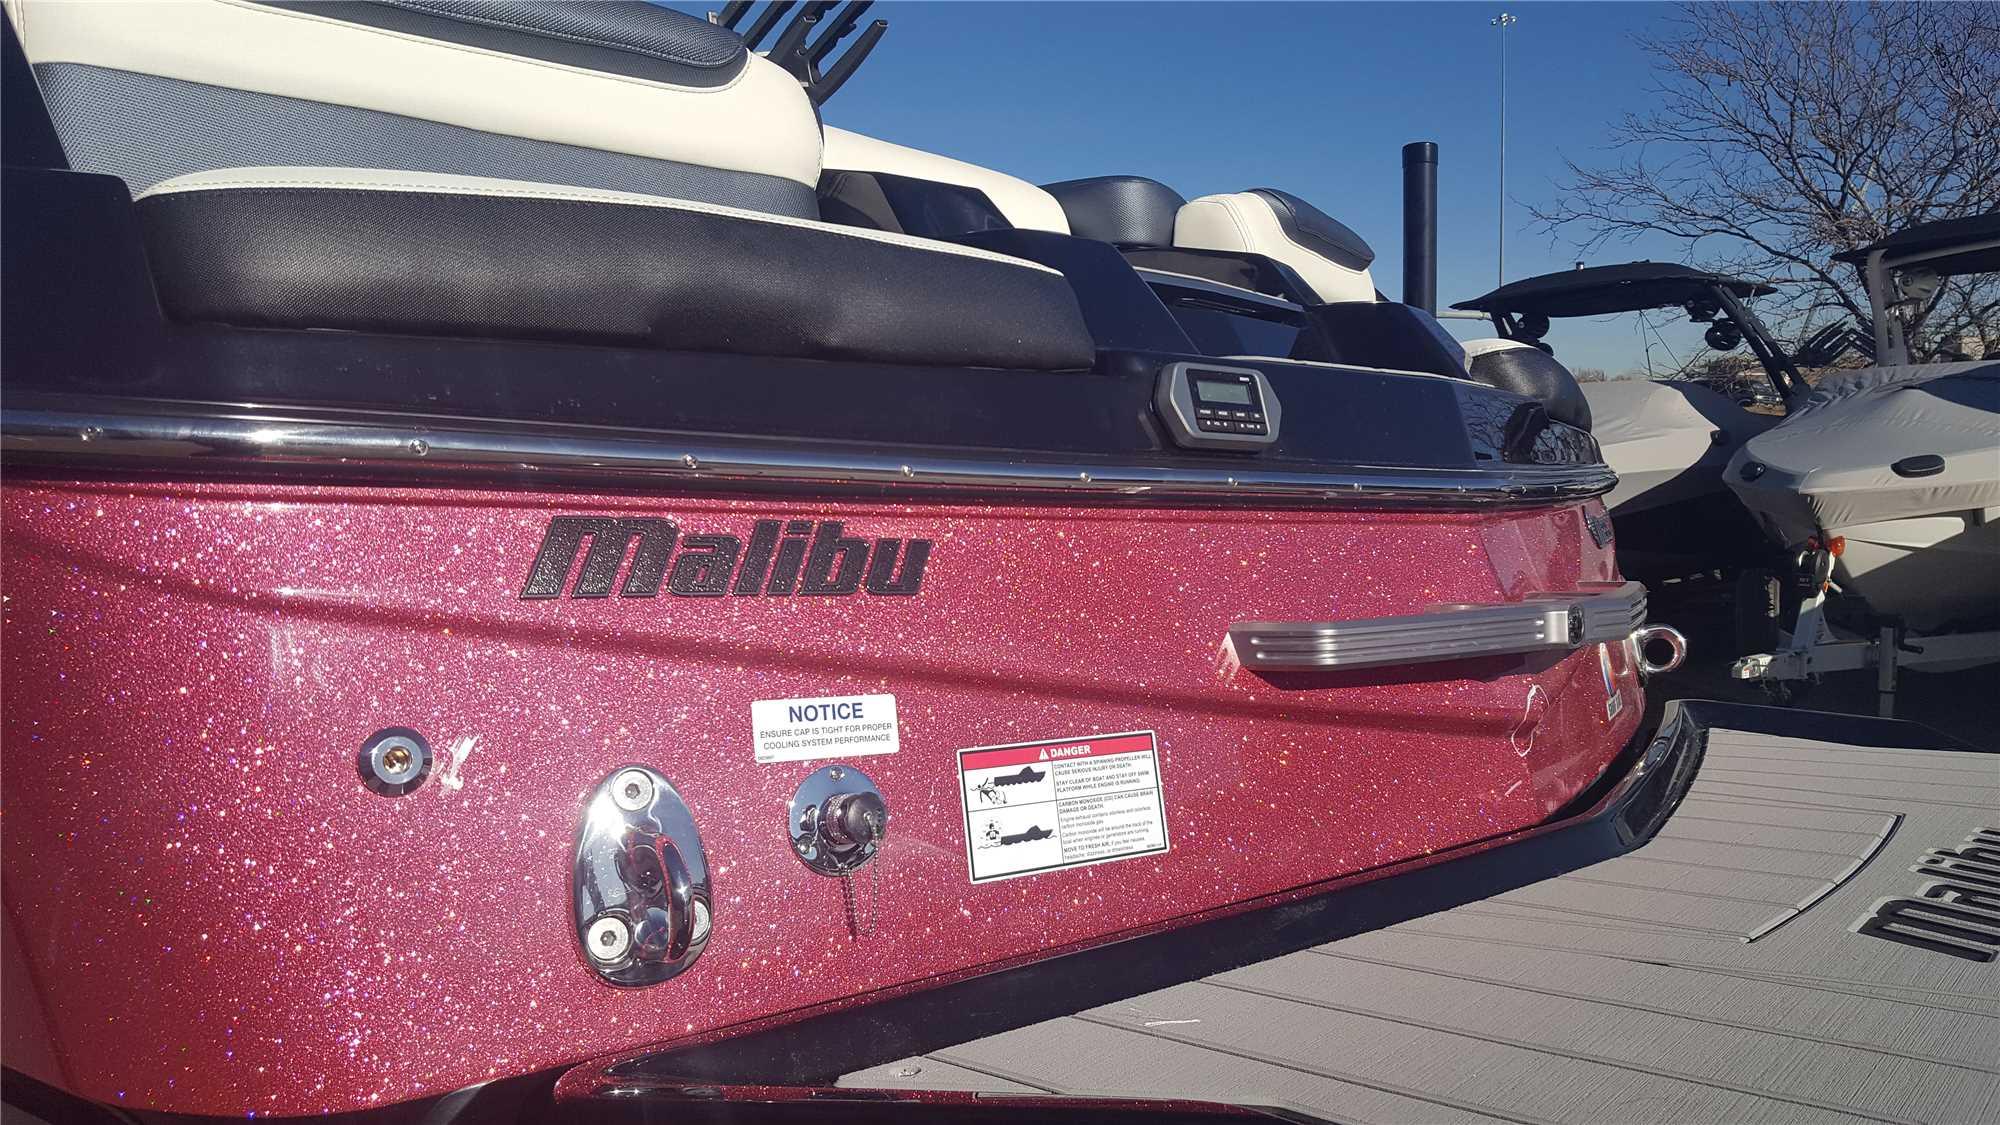 2018 Malibu M235